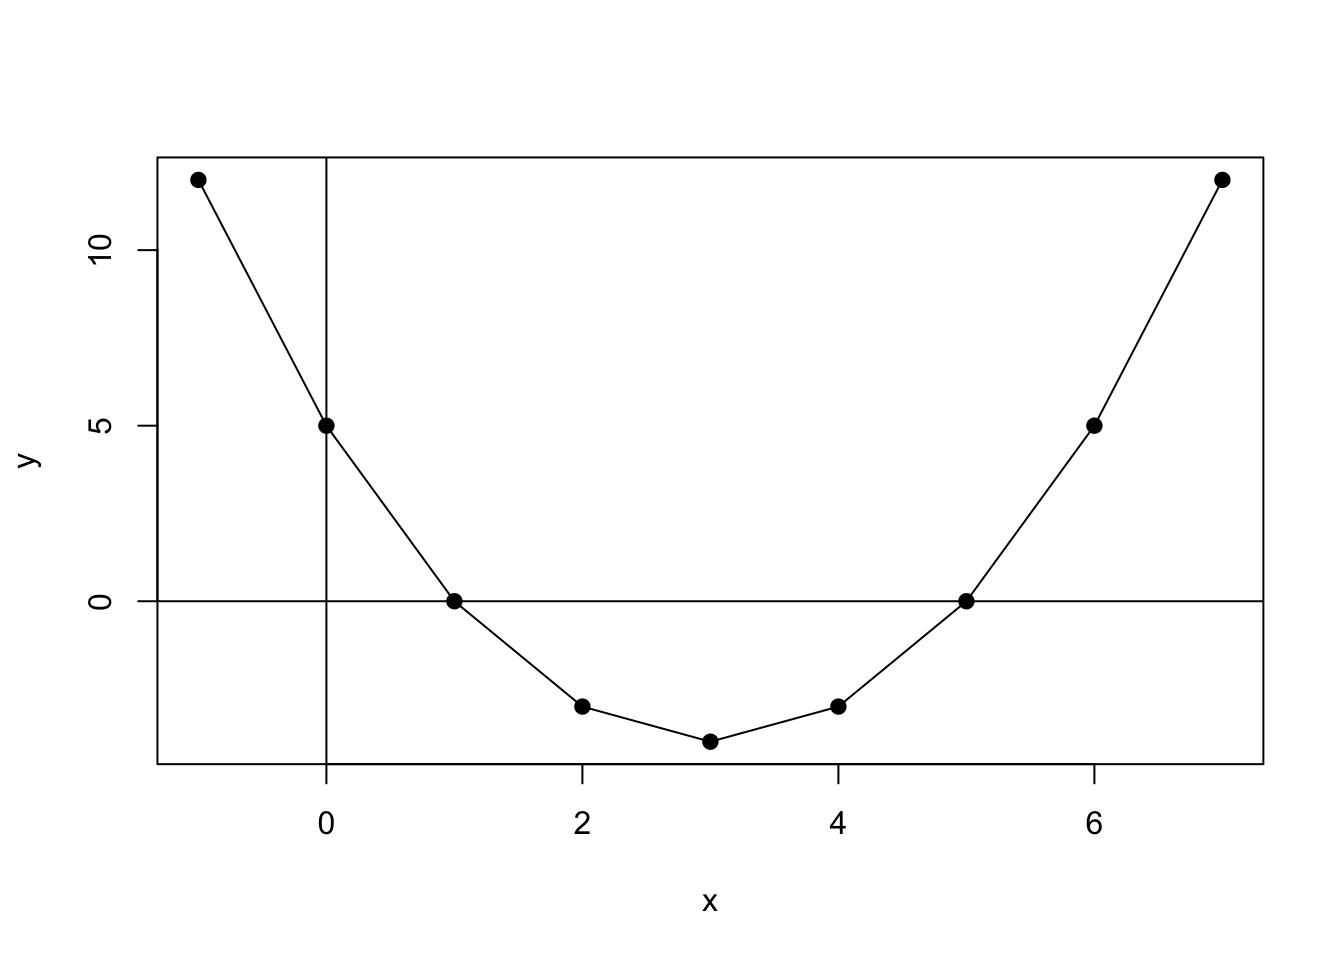 Plot of Function $y=f(x)=x^2-6x+5$